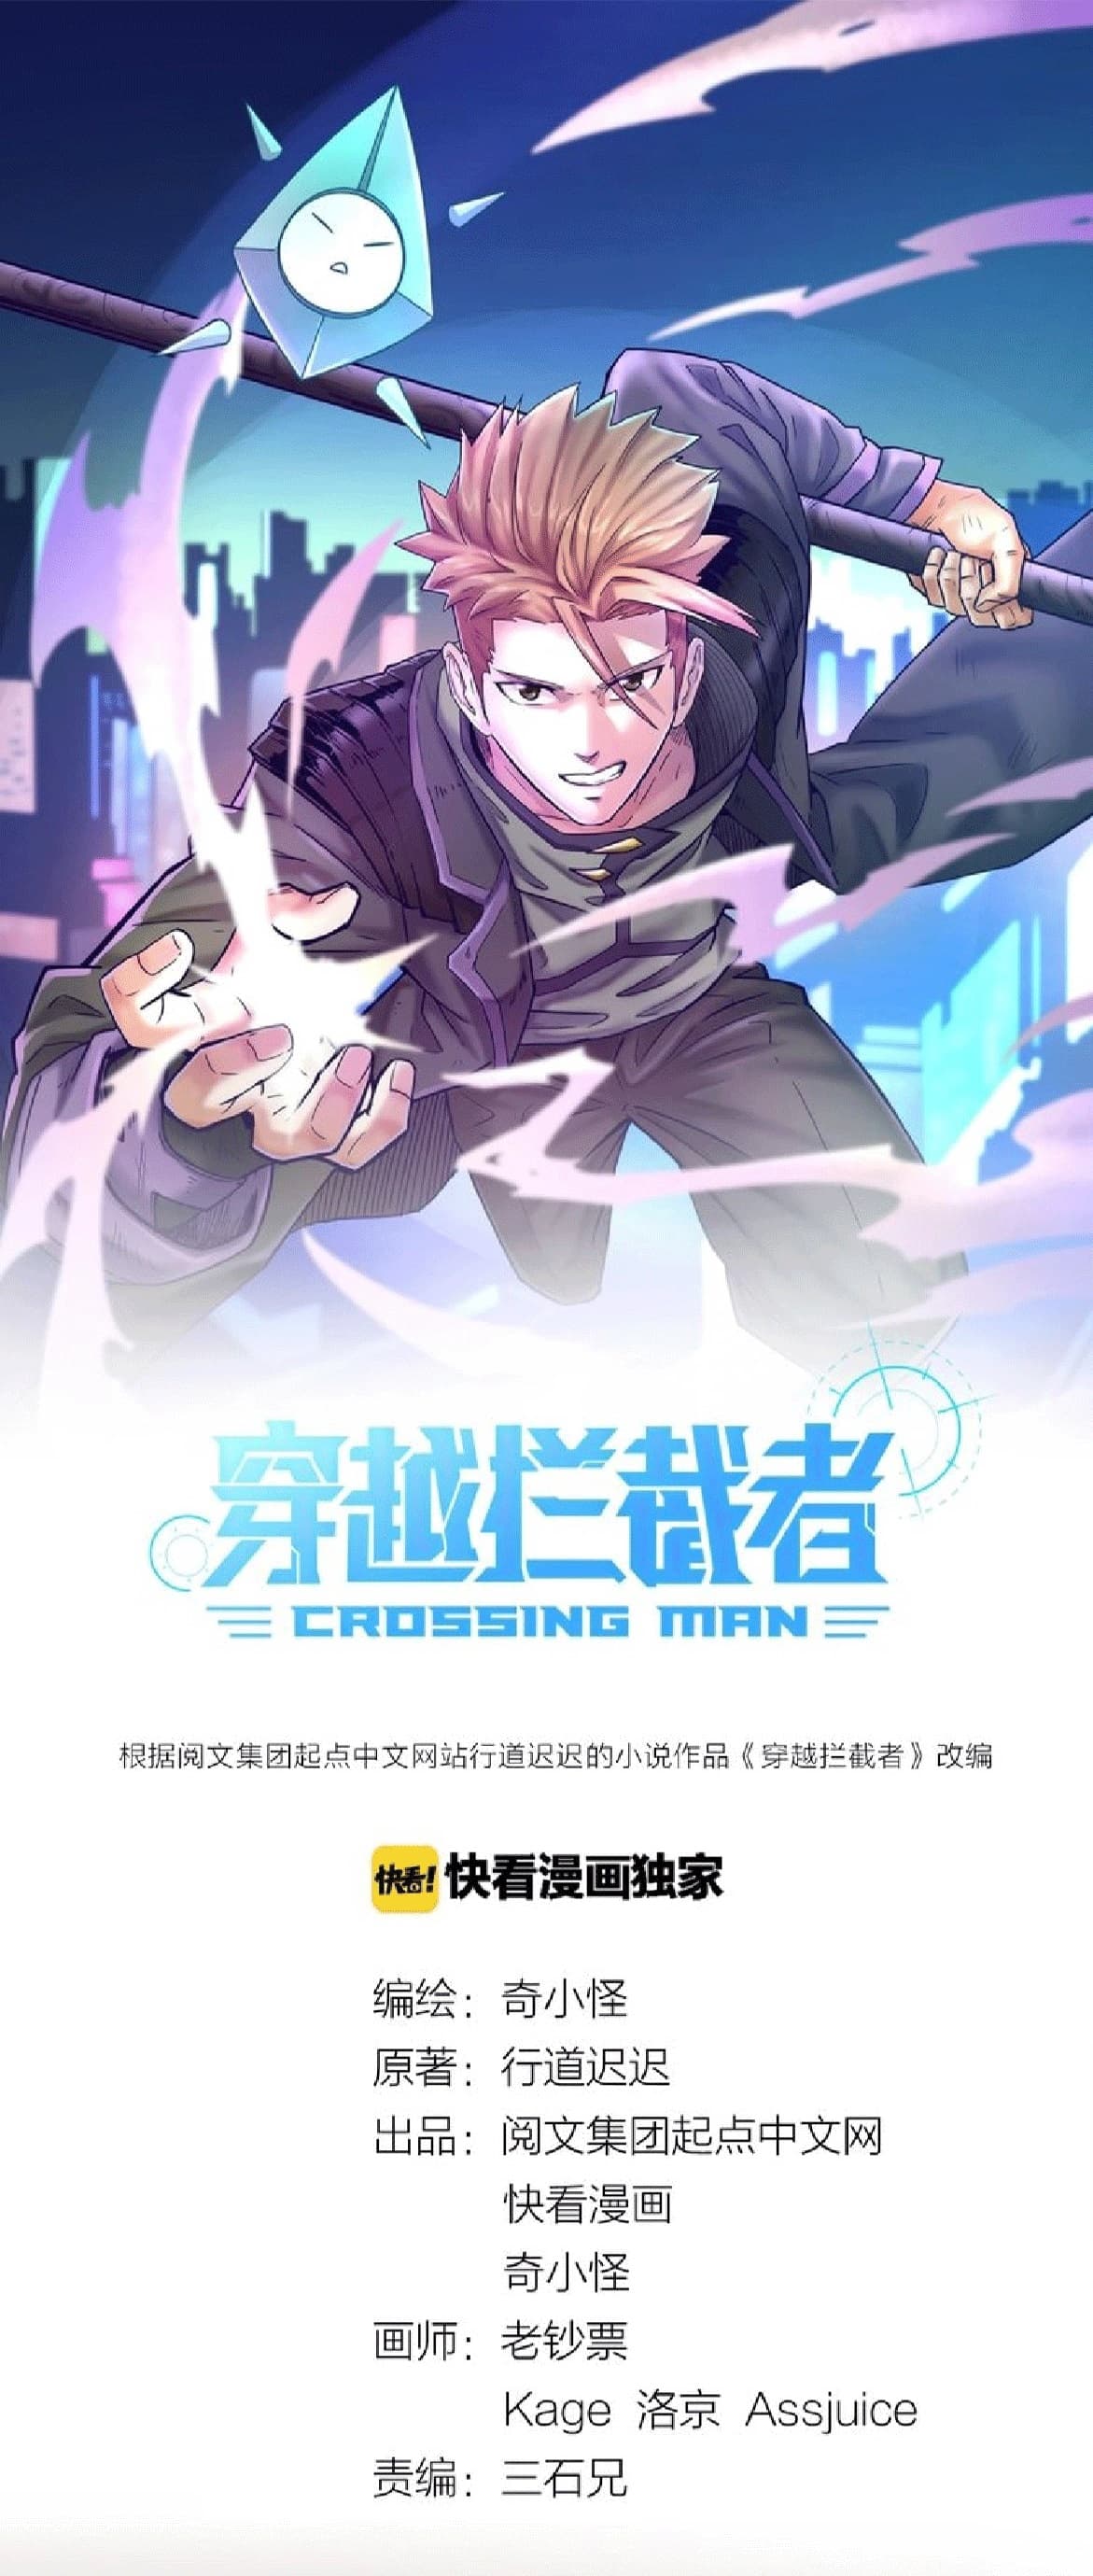 Crossing Man3 (1)